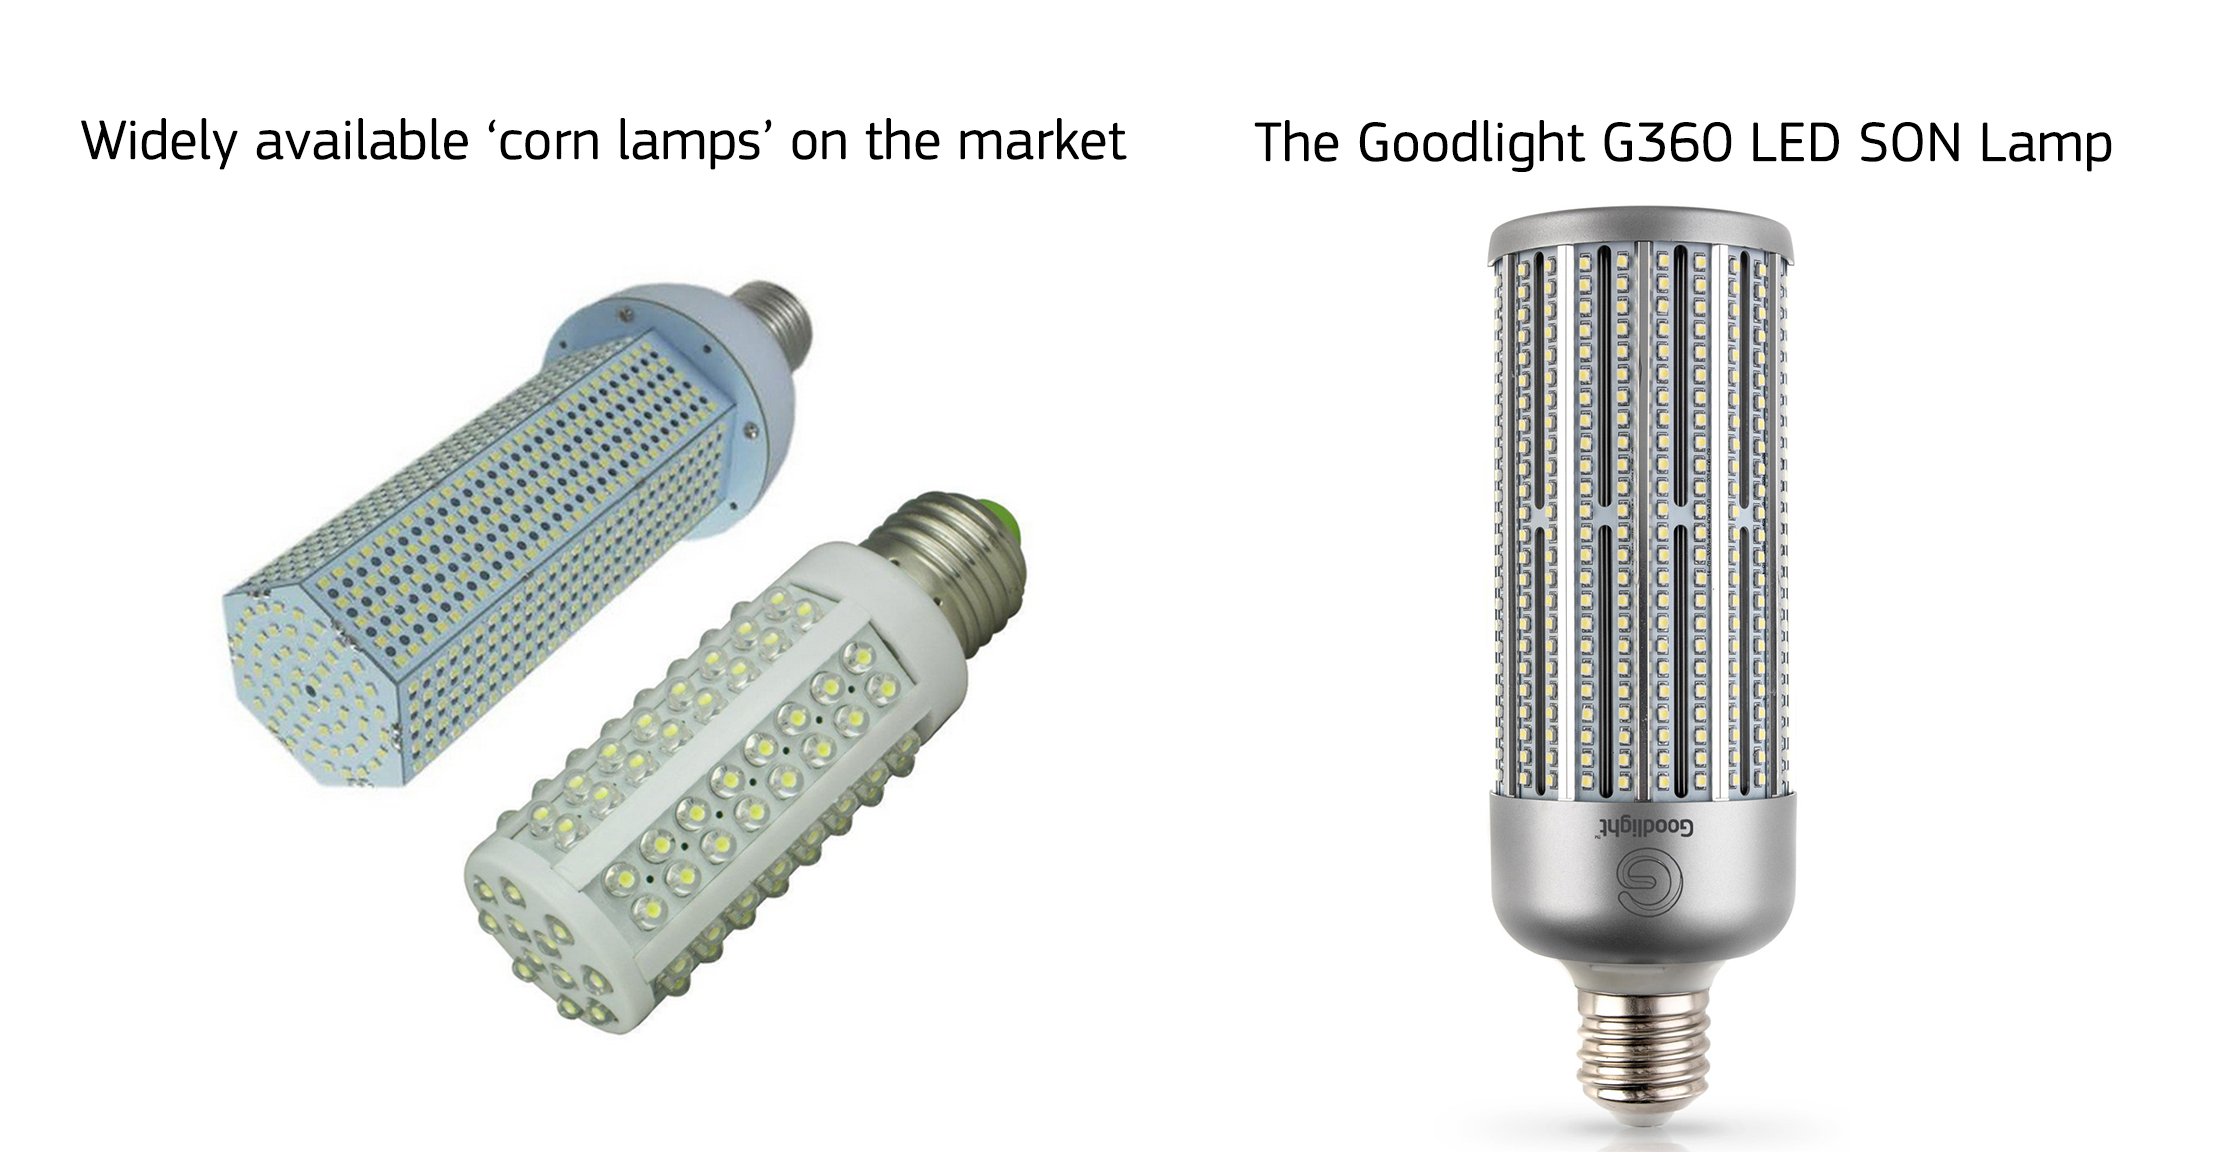 energy draining corn metal halide son lamps vs energy efficient led son lamps